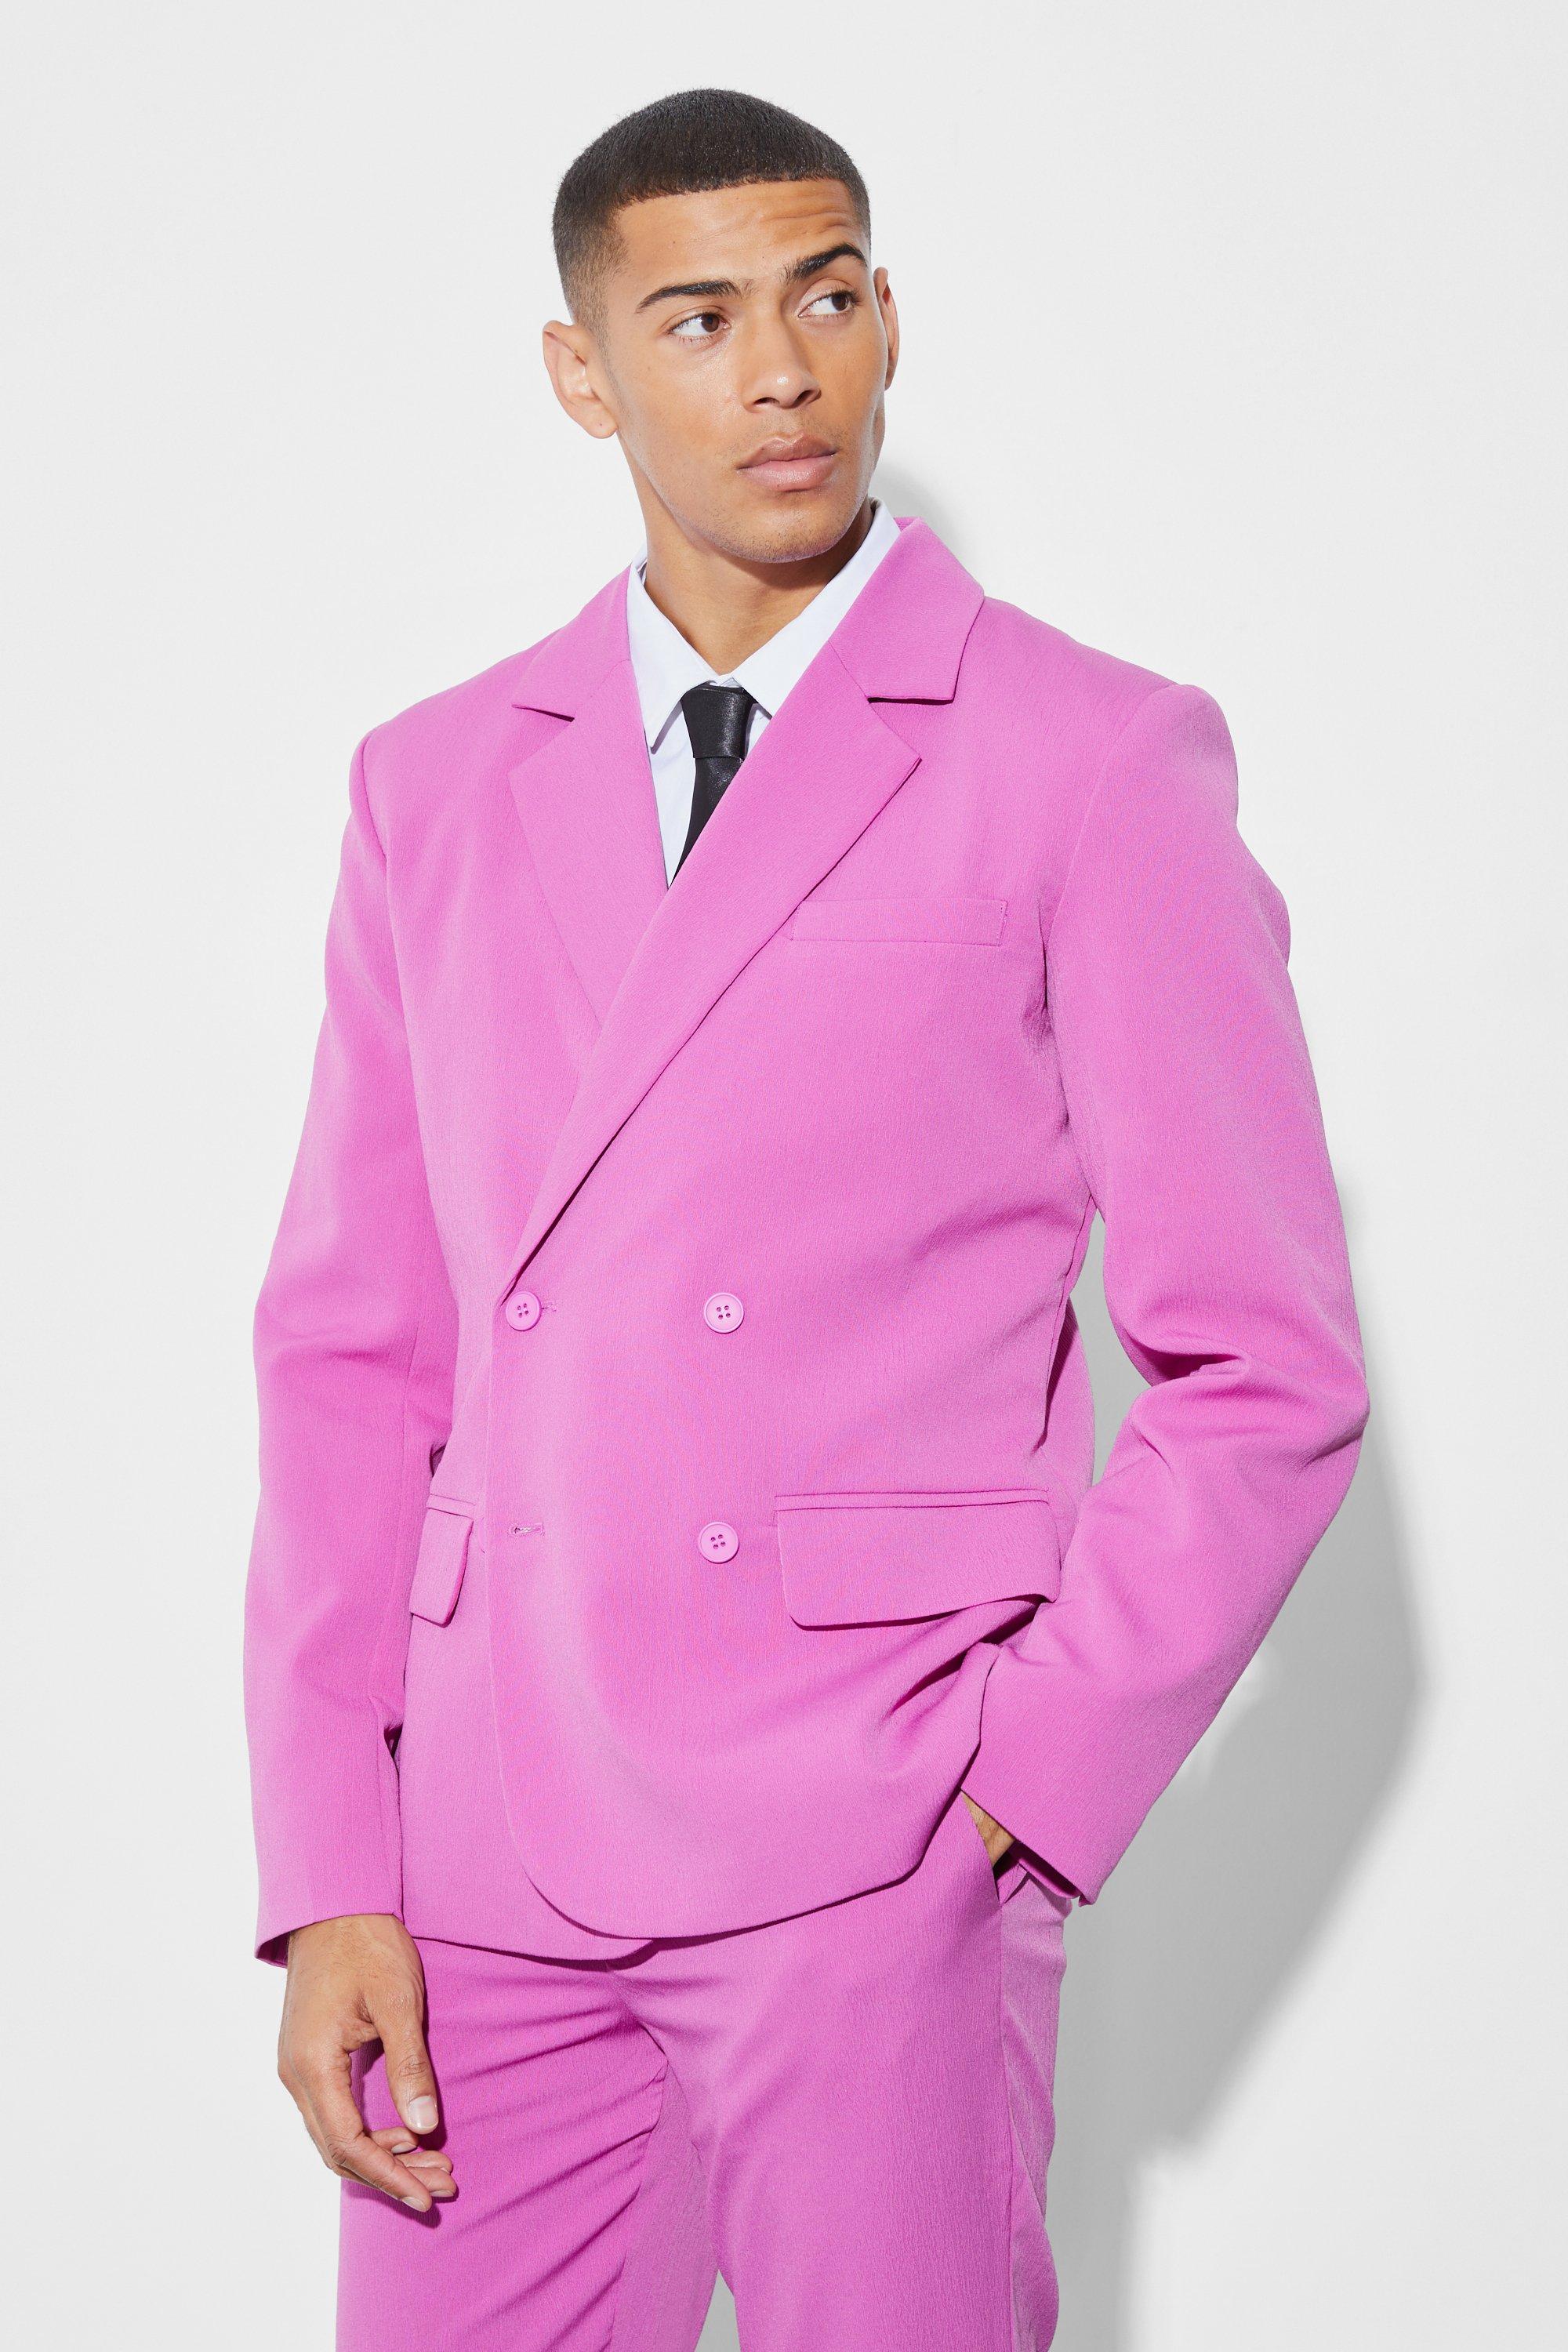 ASOS DESIGN super skinny suit jacket in raspberry pink | ASOS